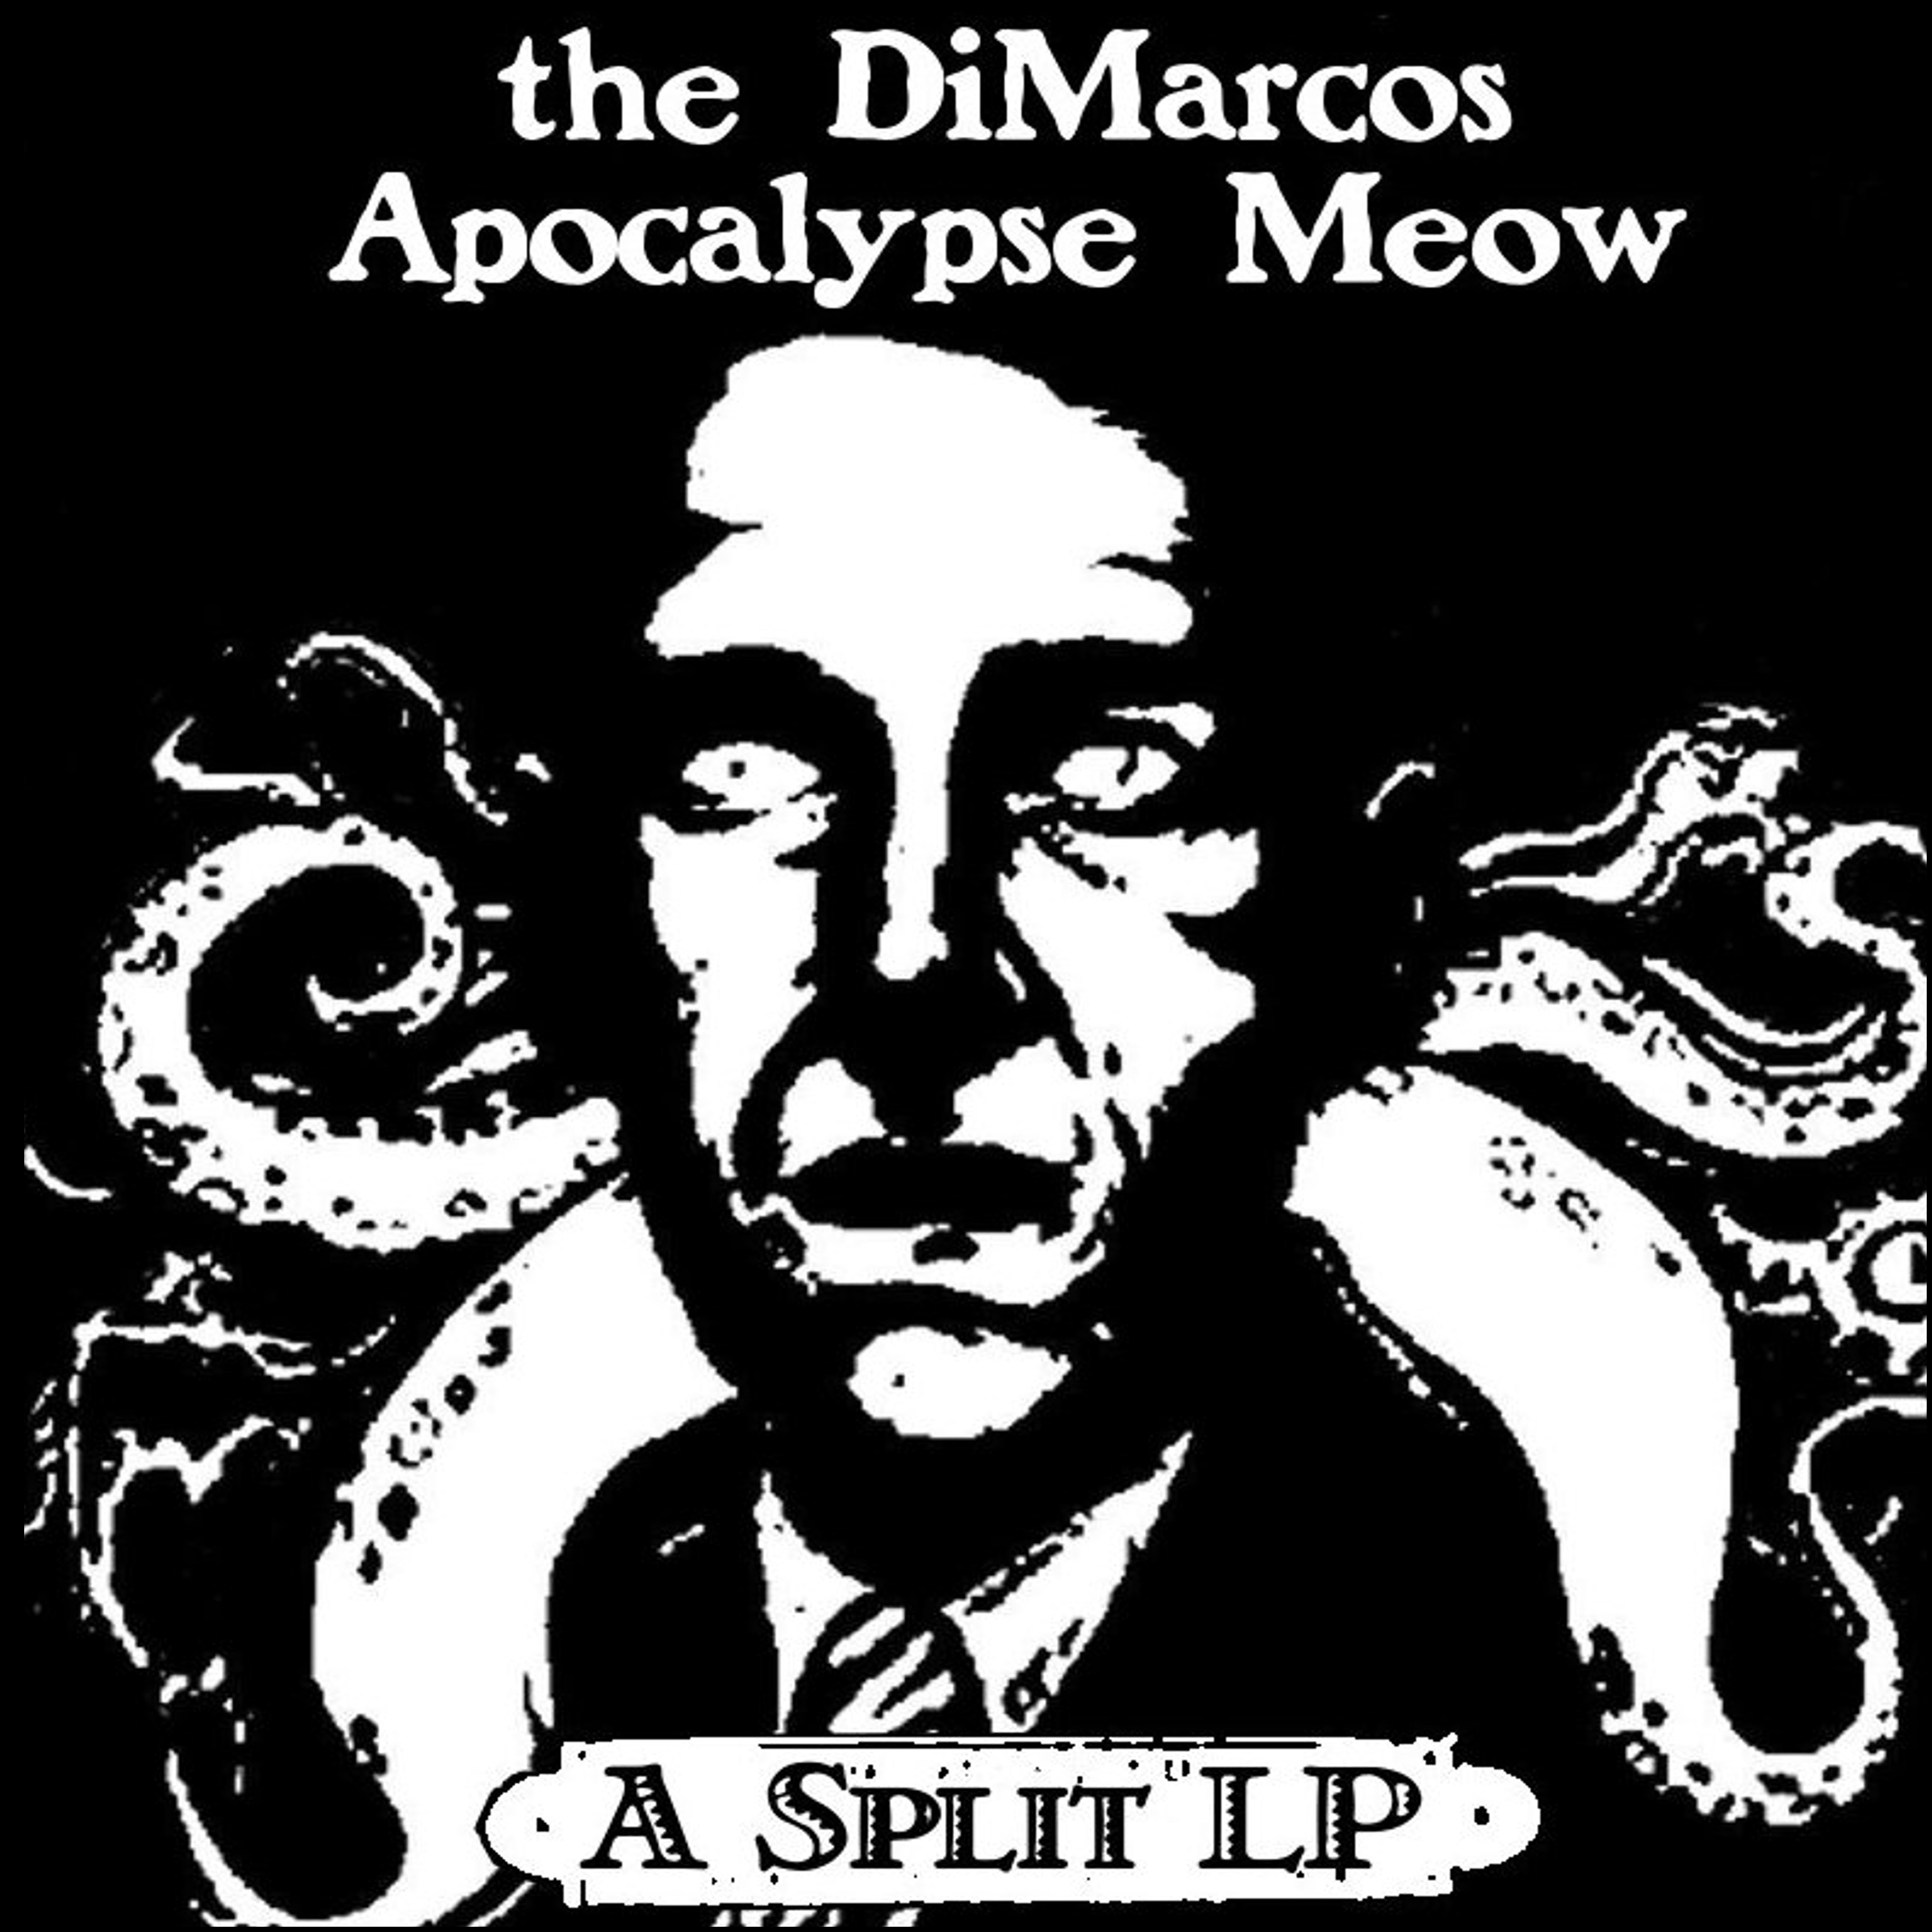 Bigger Boat Records-The DiMarcos/Apocalypse Meow split LP